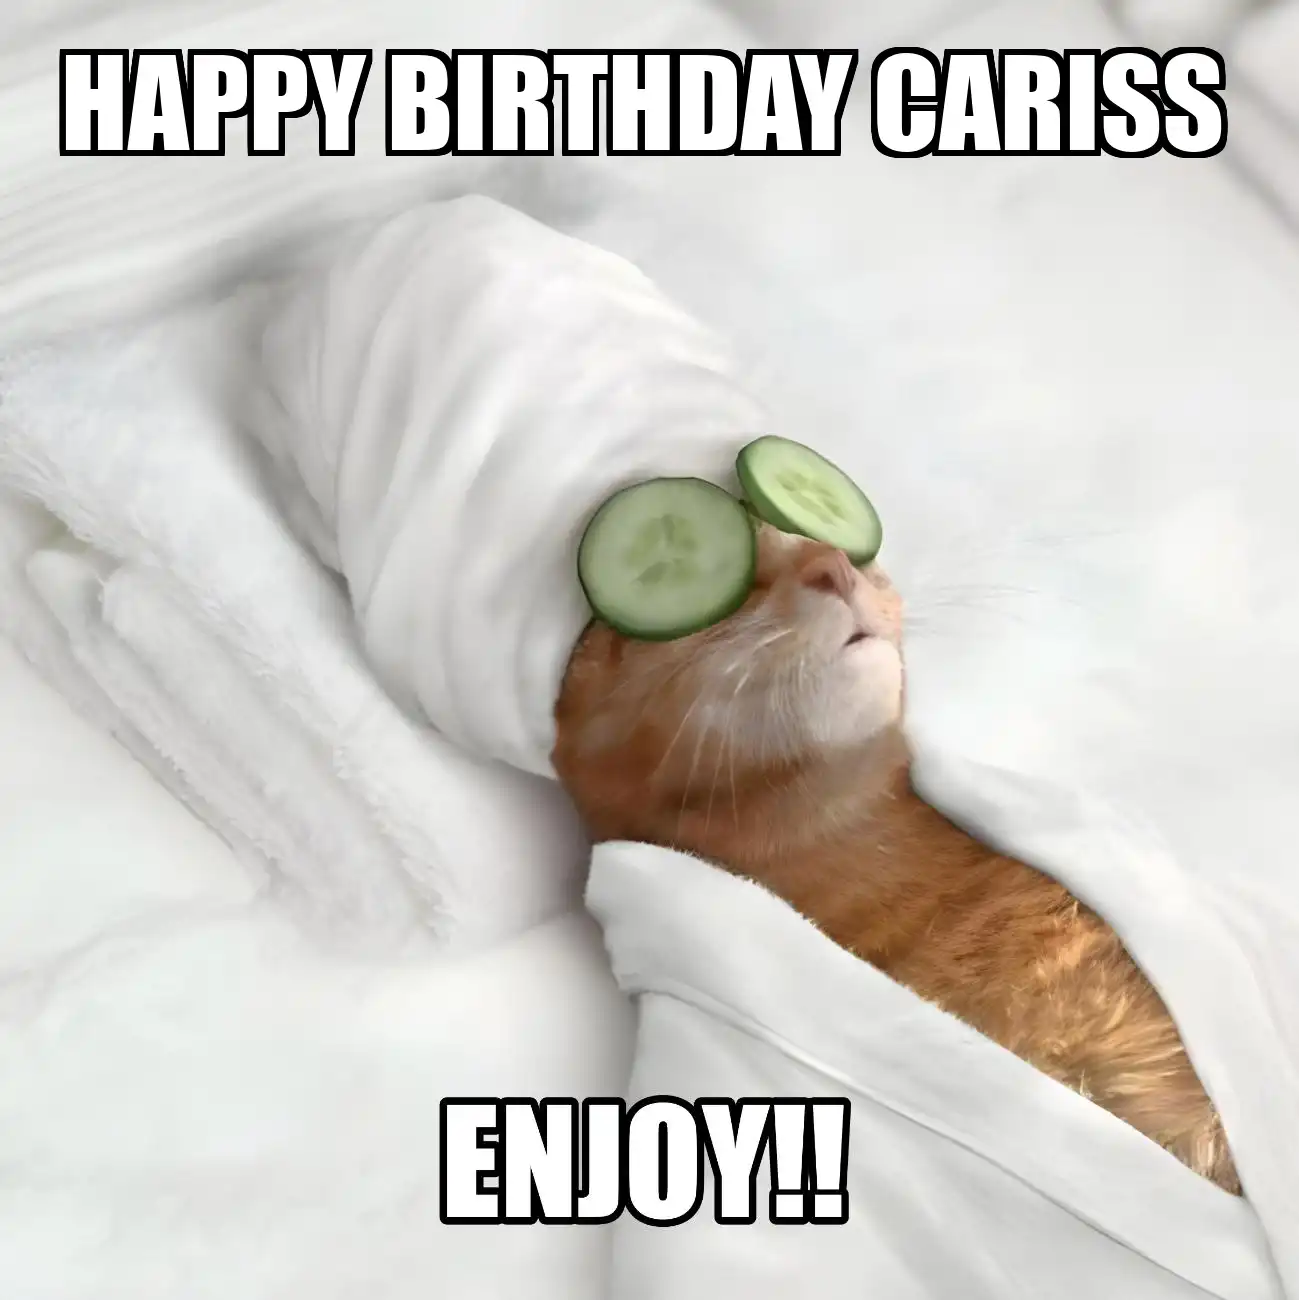 Happy Birthday Cariss Enjoy Cat Meme